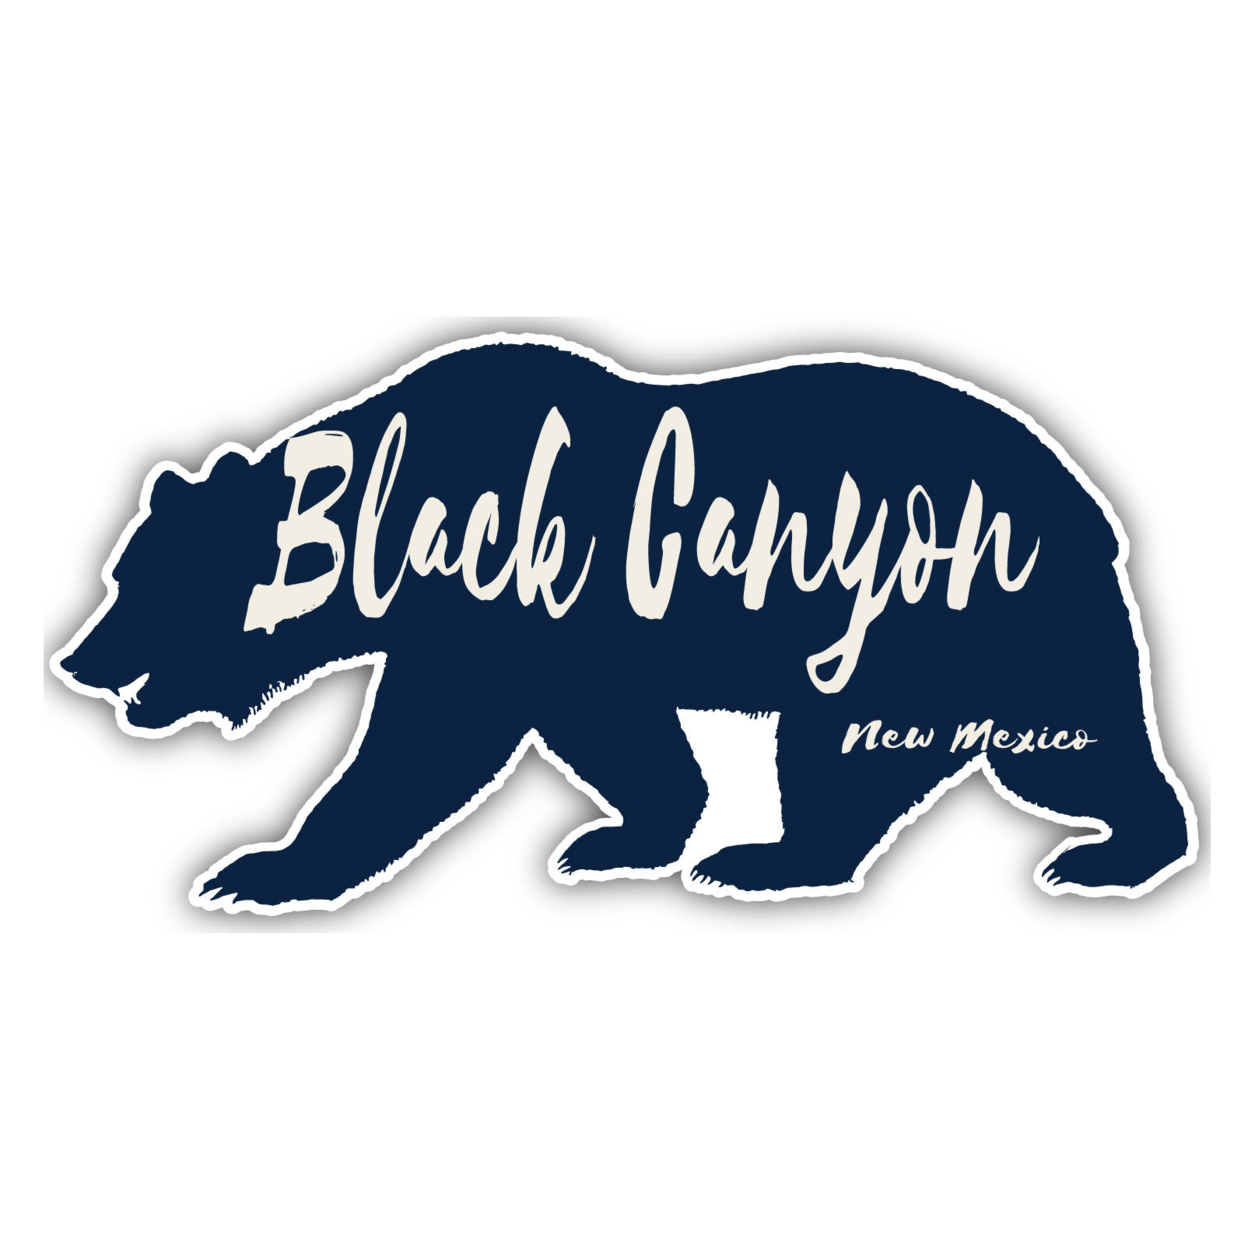 Black Canyon New Mexico Souvenir Decorative Stickers (Choose Theme And Size) - Single Unit, 6-Inch, Bear